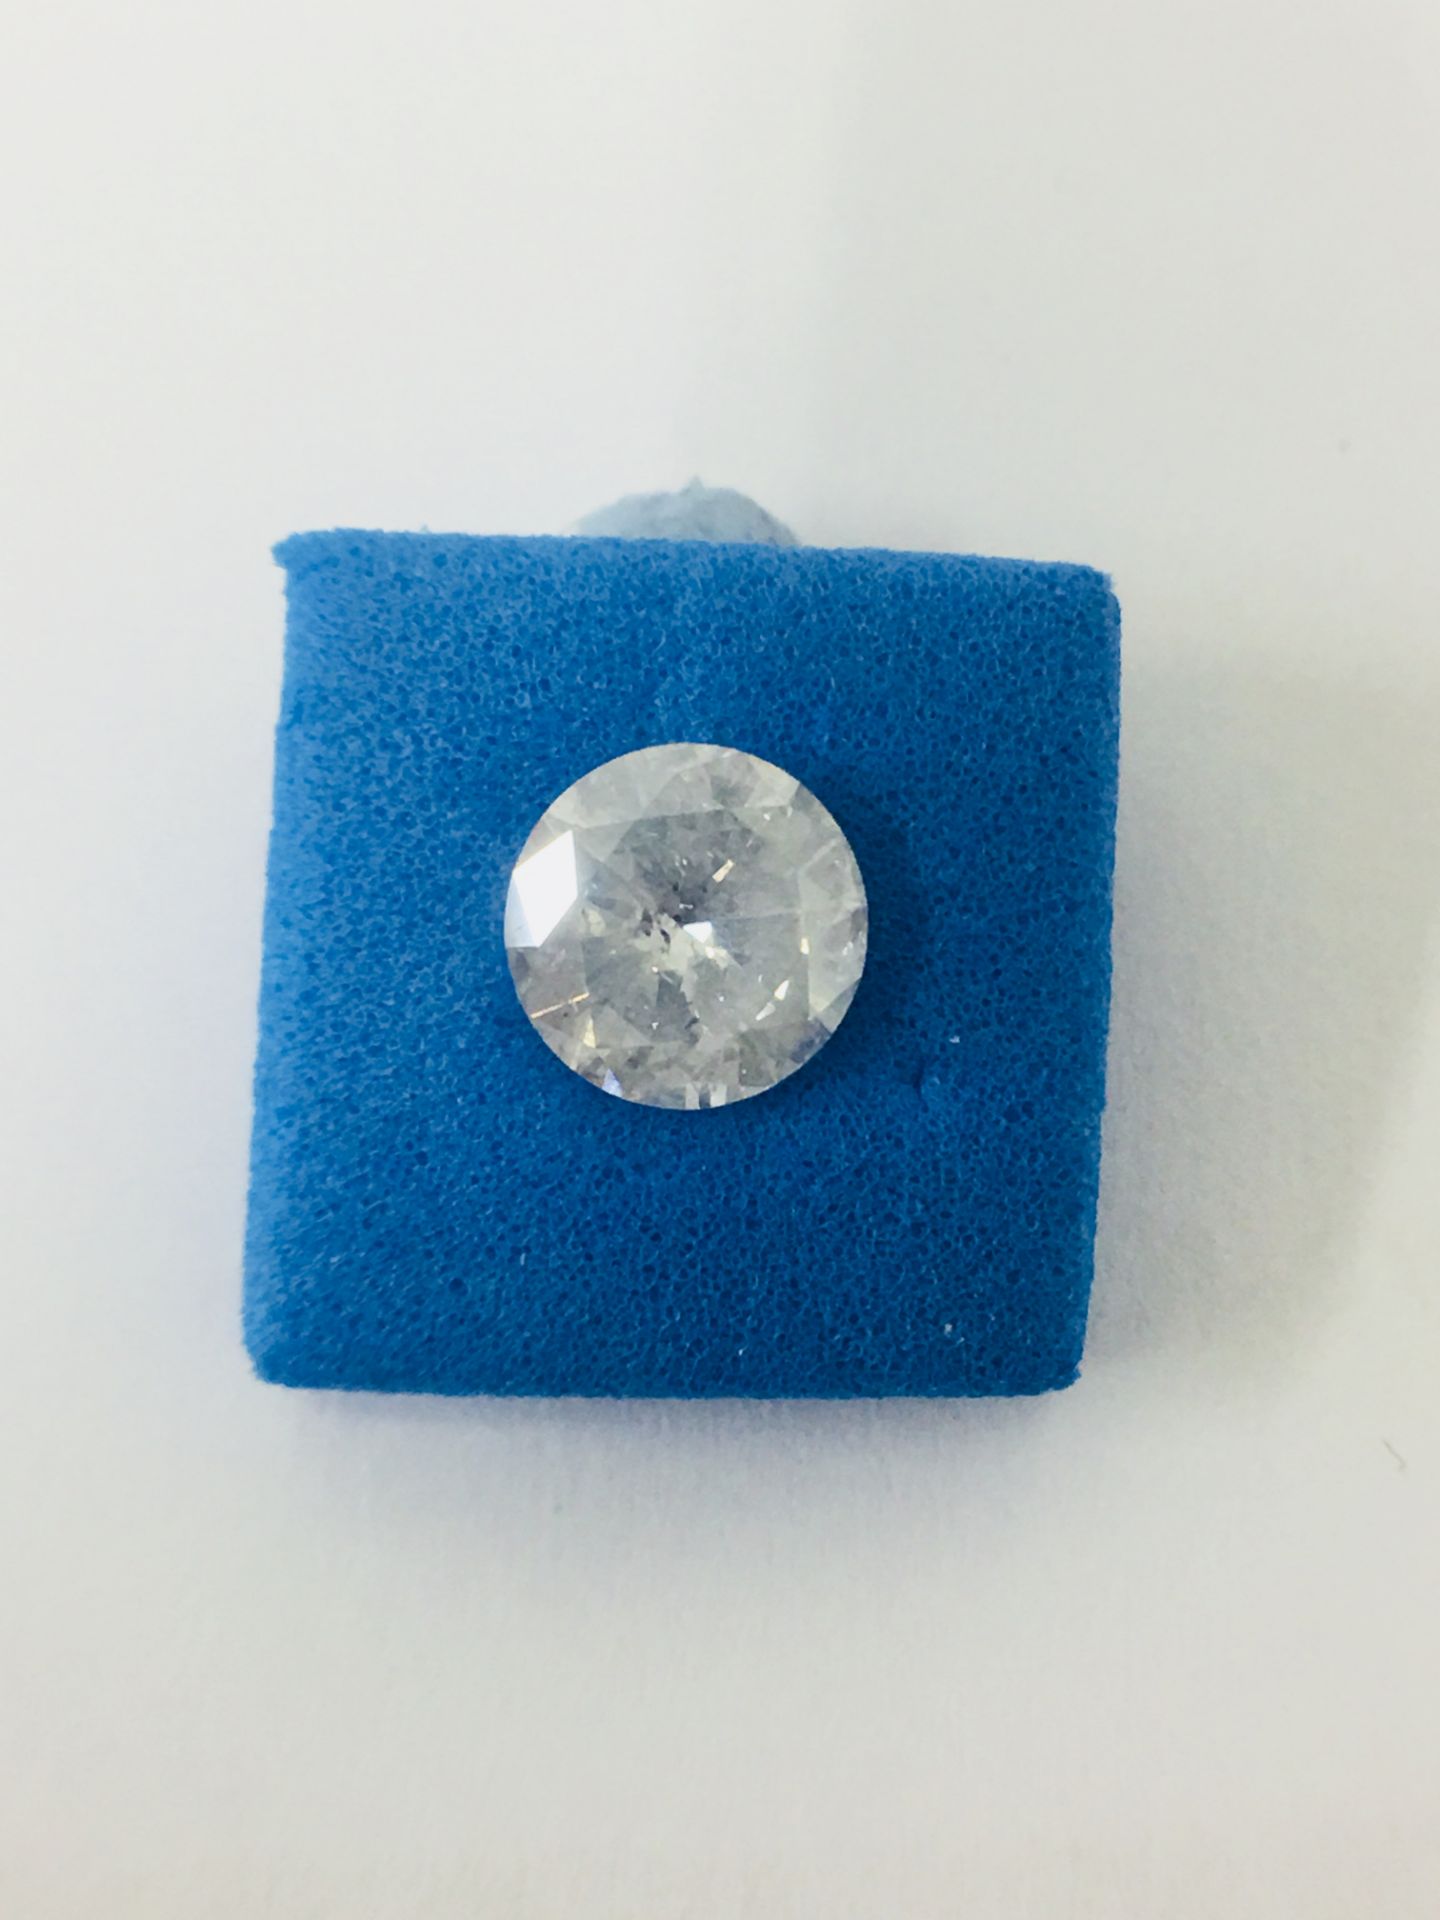 1.02ct Brilliant Cut Diamond, H colour,i2 clarity,diamond is clarity enhanced by laser